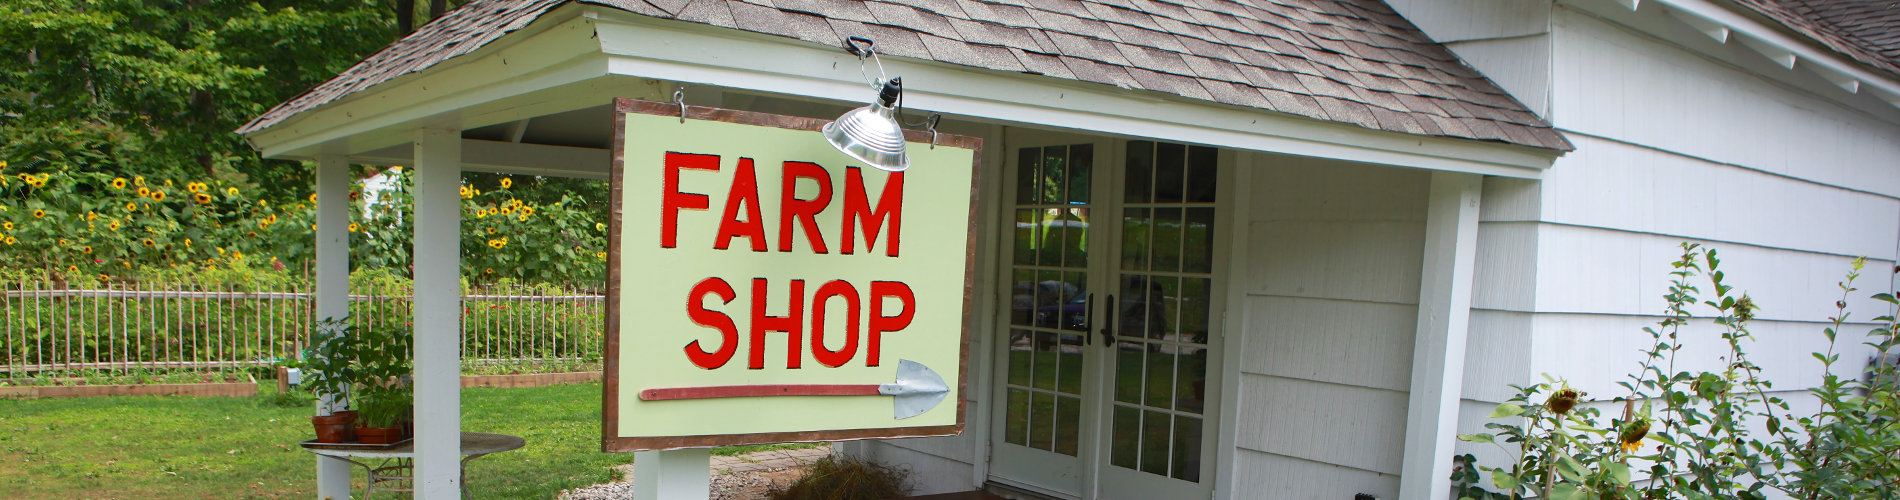 Farm Shop sign